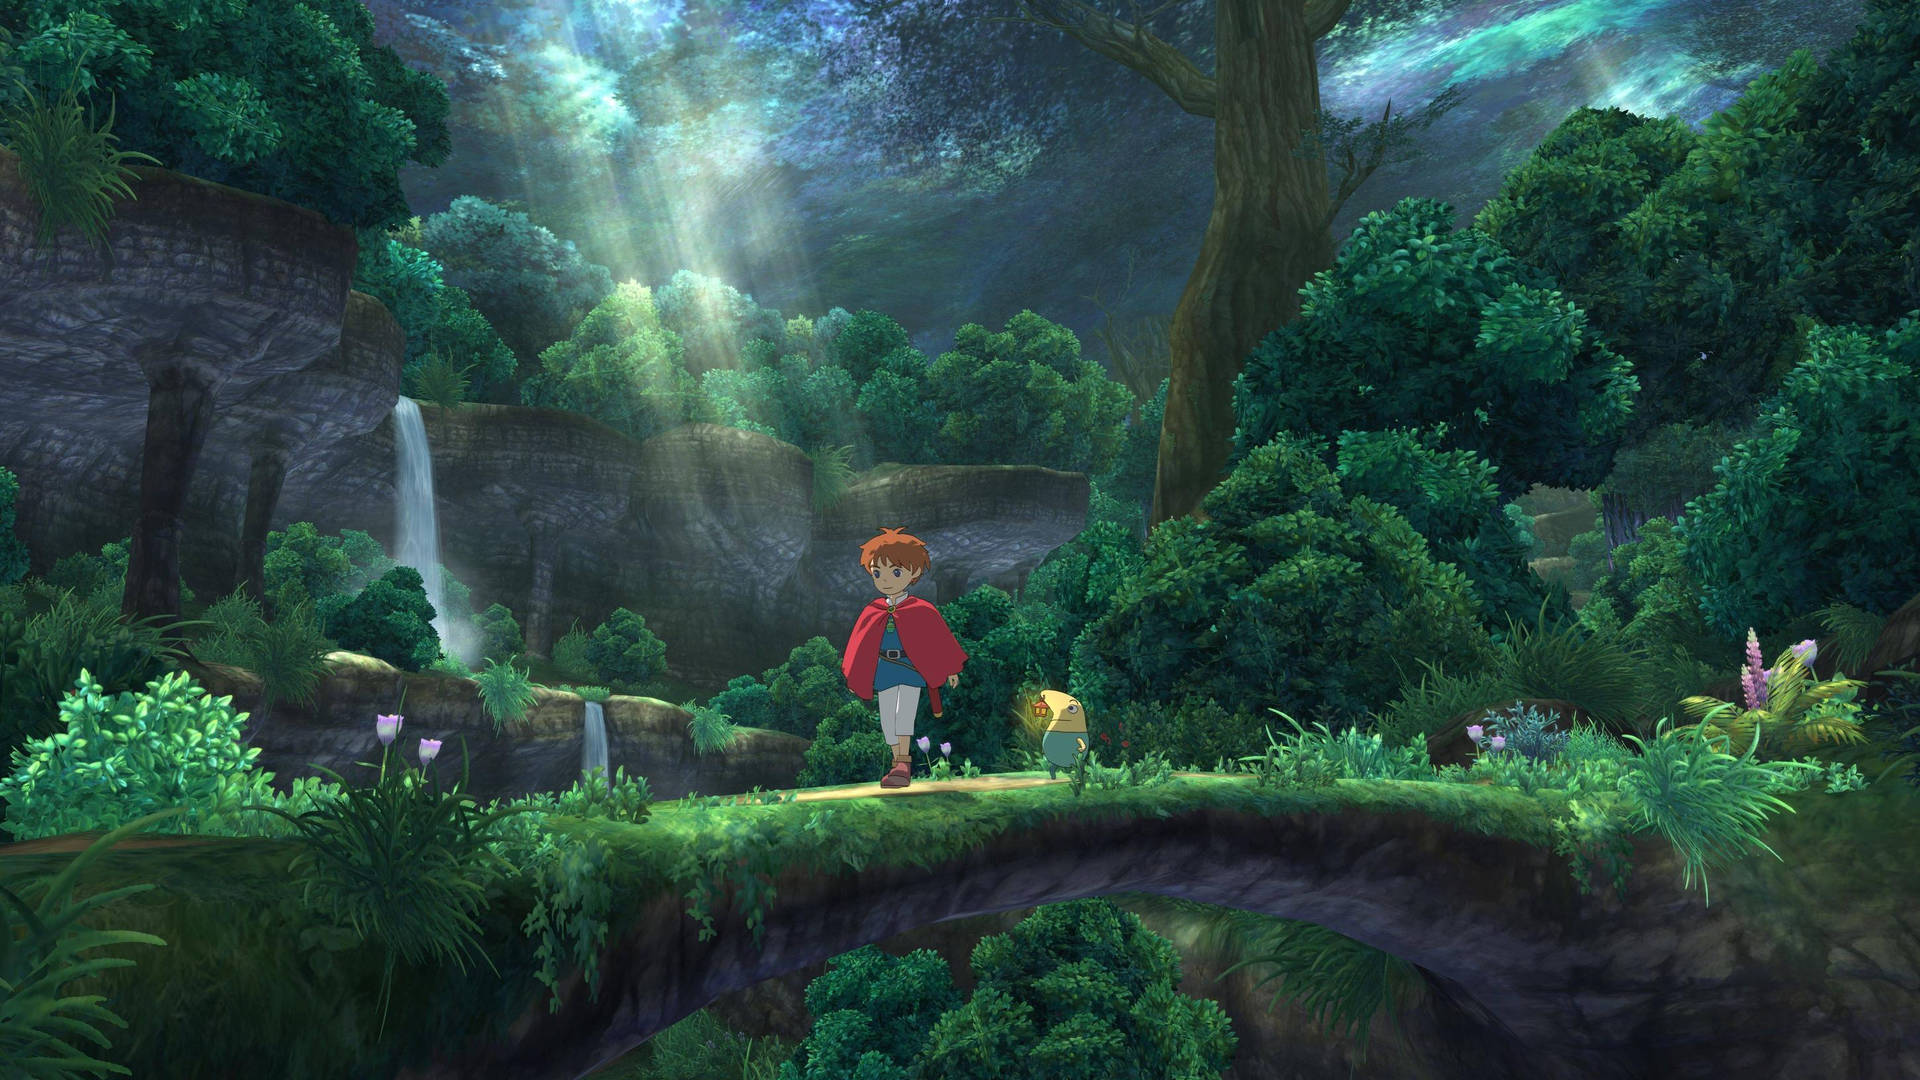 Top 999+ Studio Ghibli Scenery Wallpaper Full HD, 4K✅Free to Use